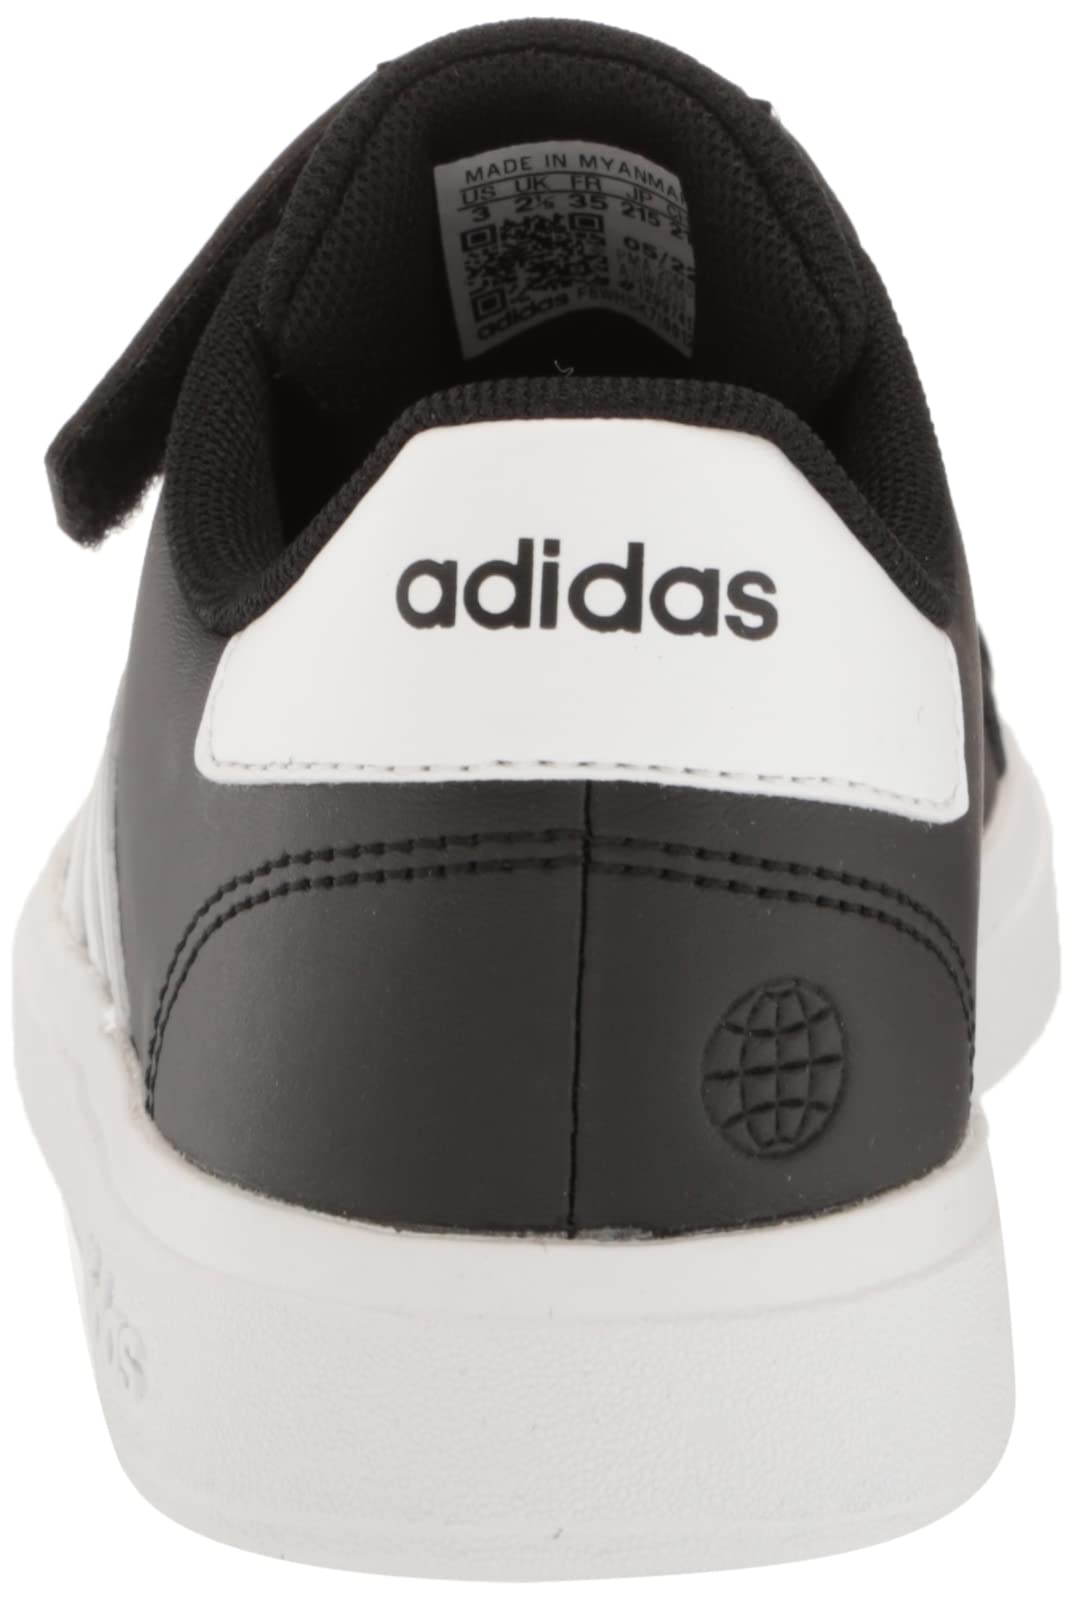 adidas Unisex-Child Grand Court 2.0 Tennis Shoe